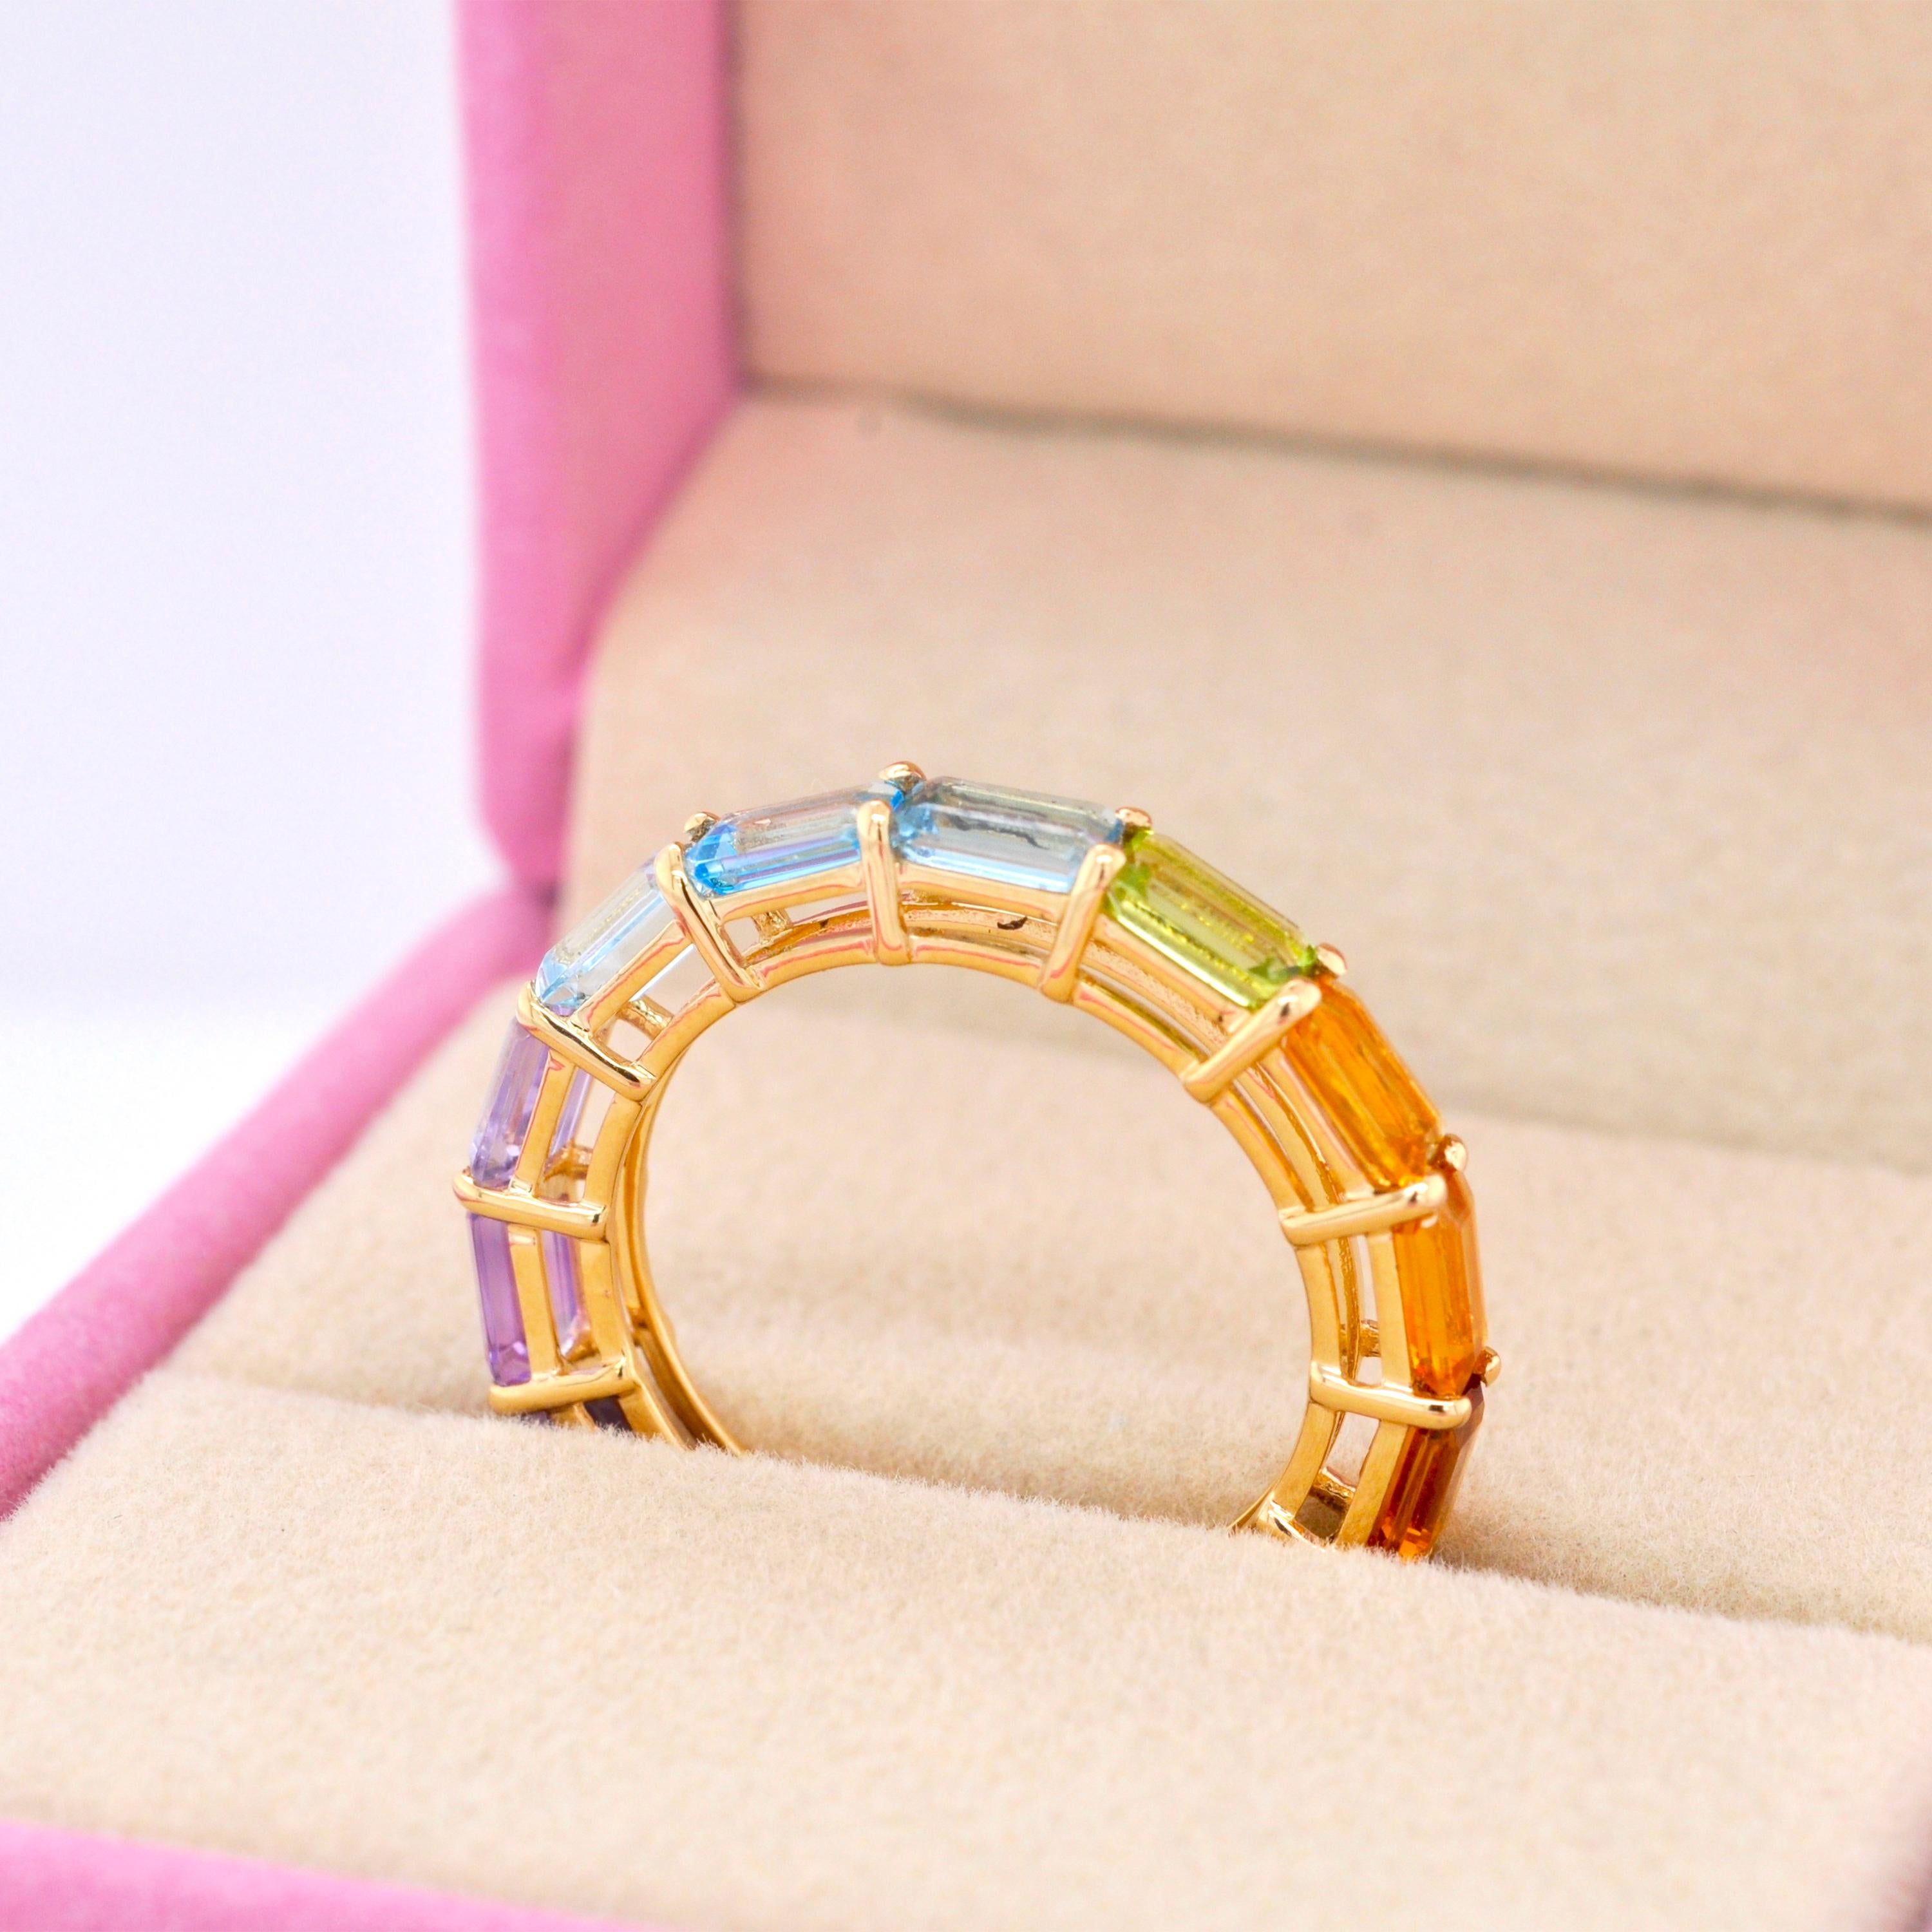 En vente :  Anneau d'éternité en or 18 carats serti de pierres précieuses octogonales multicolores arc-en-ciel 7